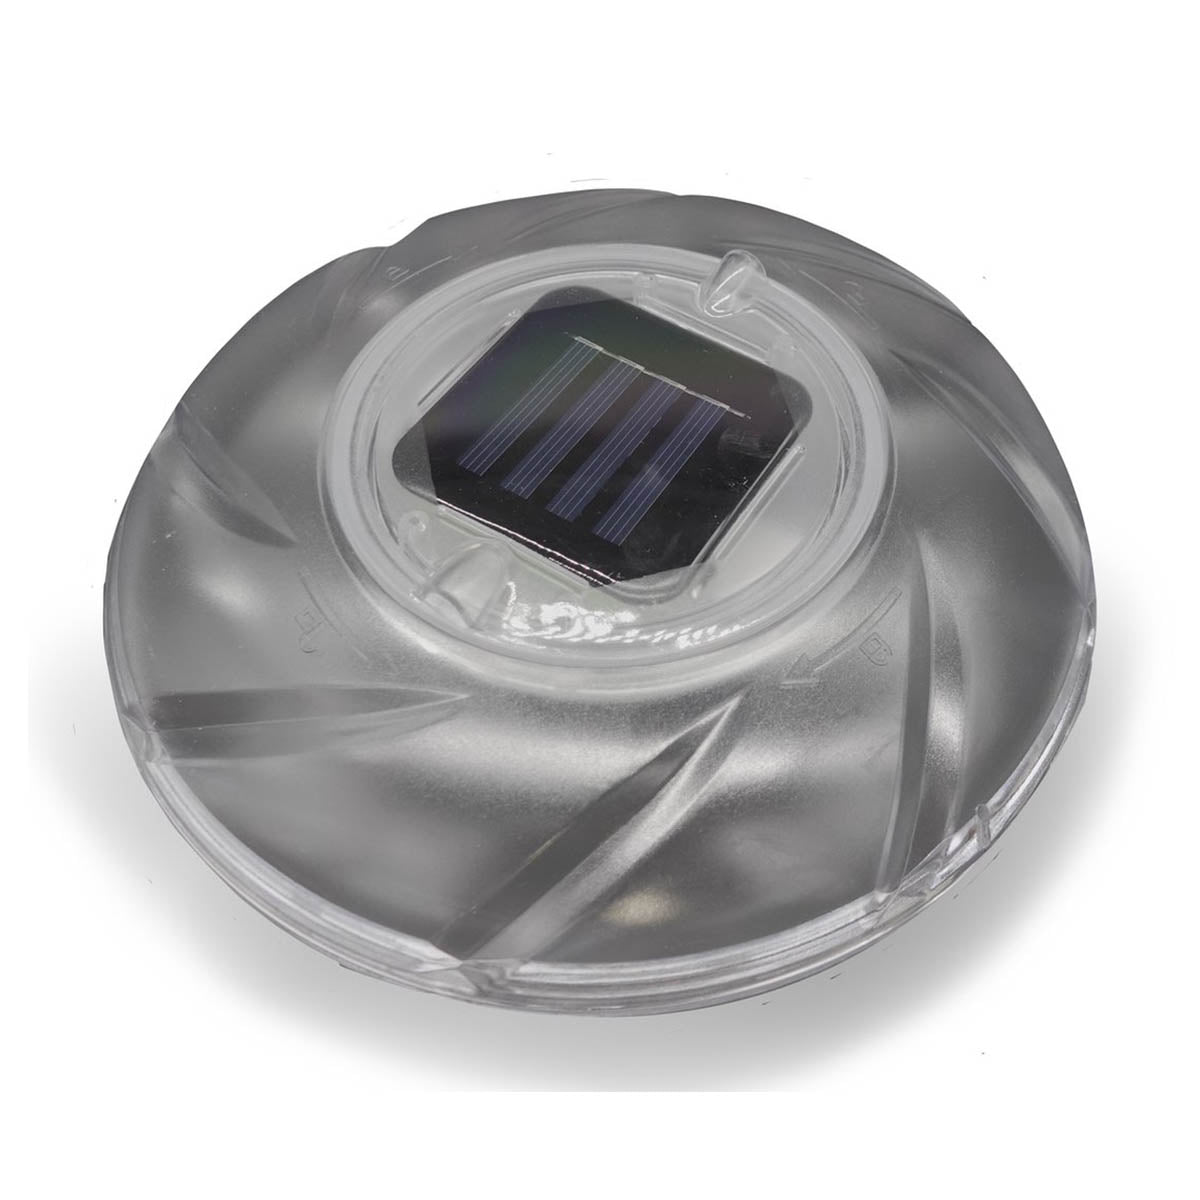 Ariko Solar Zwembad lamp - LED - Drijvend licht - RGB Lamp - Sfeer licht - Vijver licht